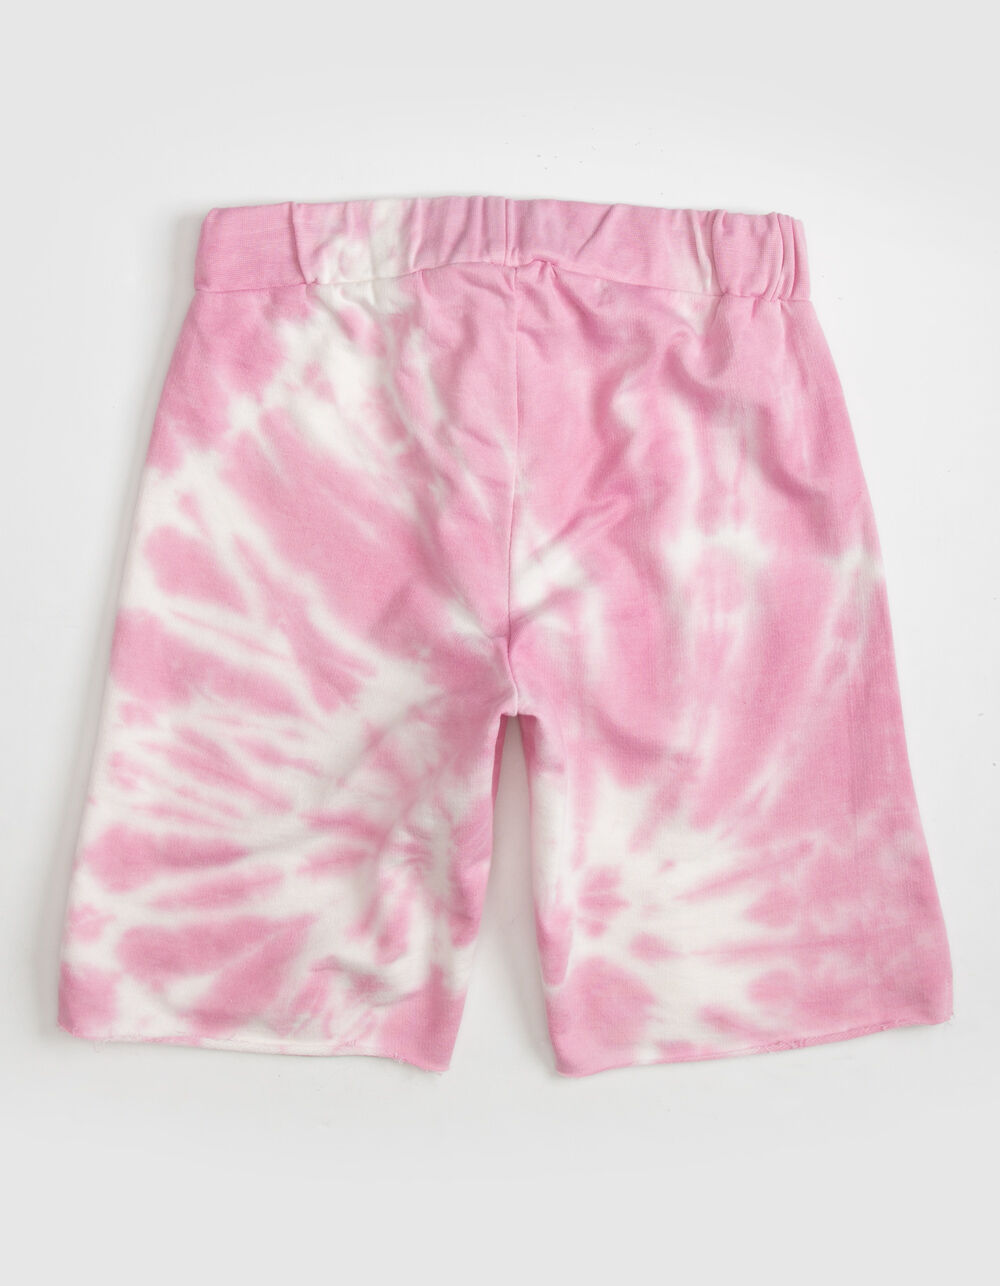 FULL CIRCLE TRENDS Tie Dye Raw Edge Girls Pink Sweat Shorts - PINK ...